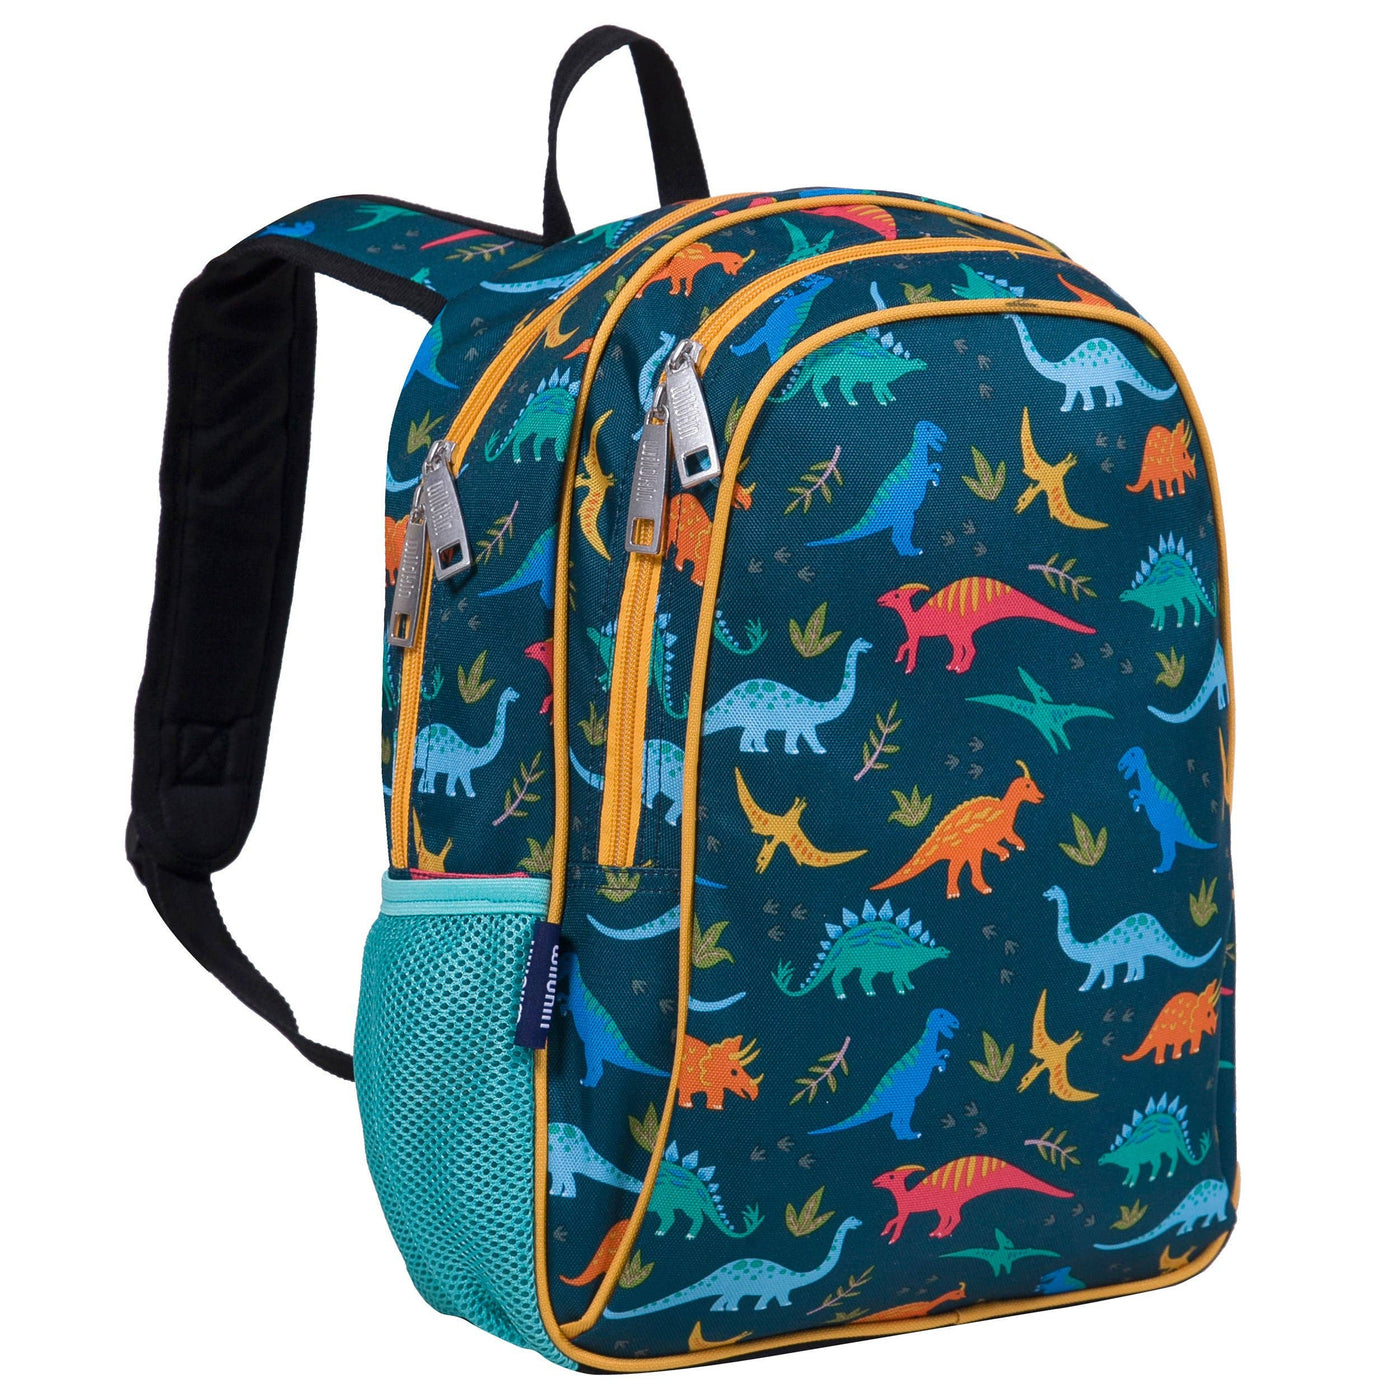 Wildkin - Jurassic Dinosaurs Backpack - 15 Inch